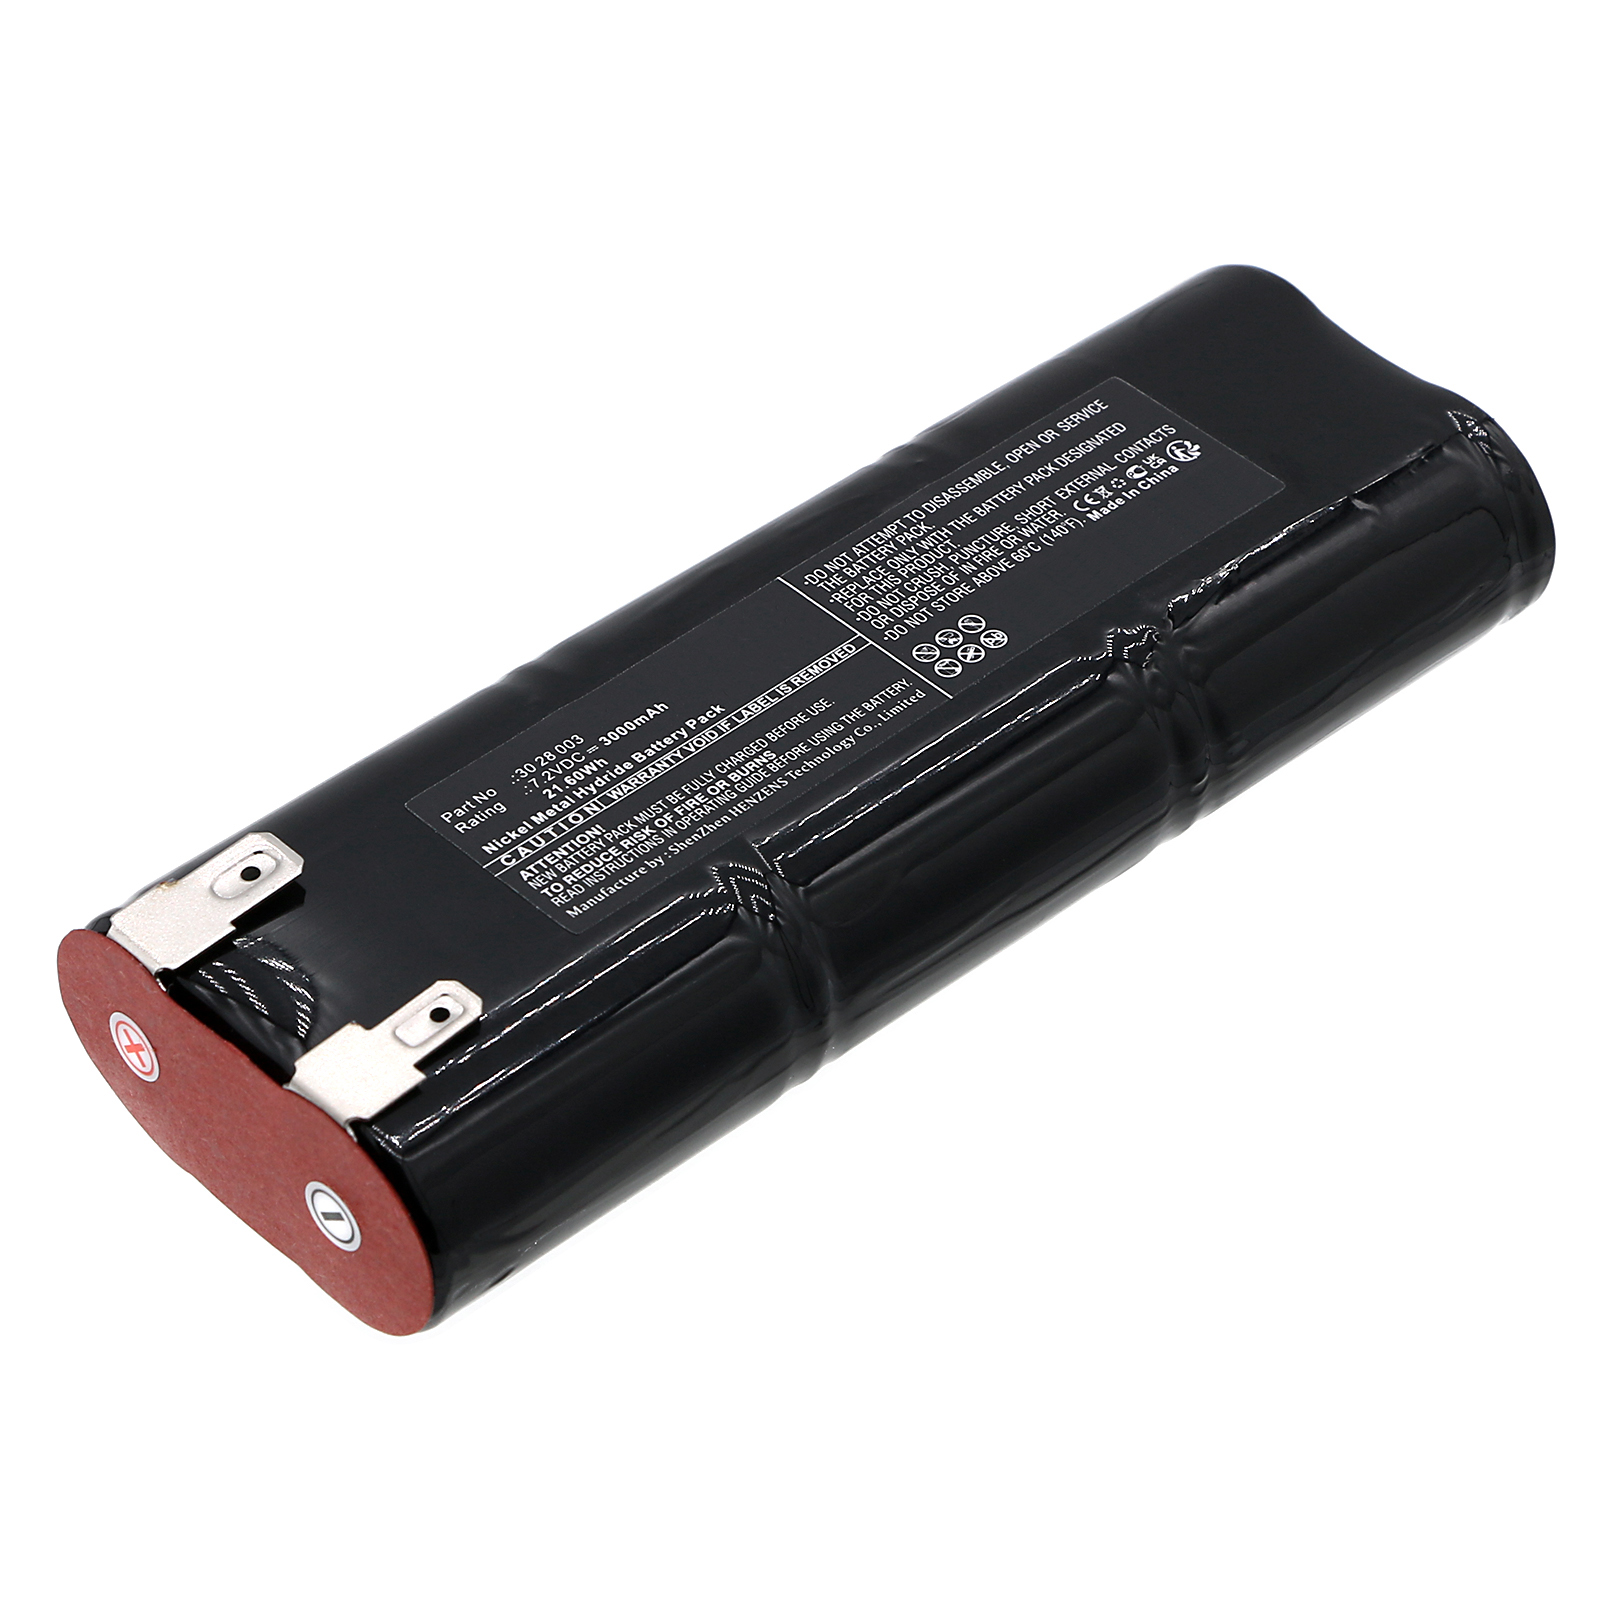 Synergy Digital Vacuum Cleaner Battery, Compatible with Fakir 30 27 003, 30 28 003 Vacuum Cleaner Battery (Ni-MH, 7.2V, 3000mAh)